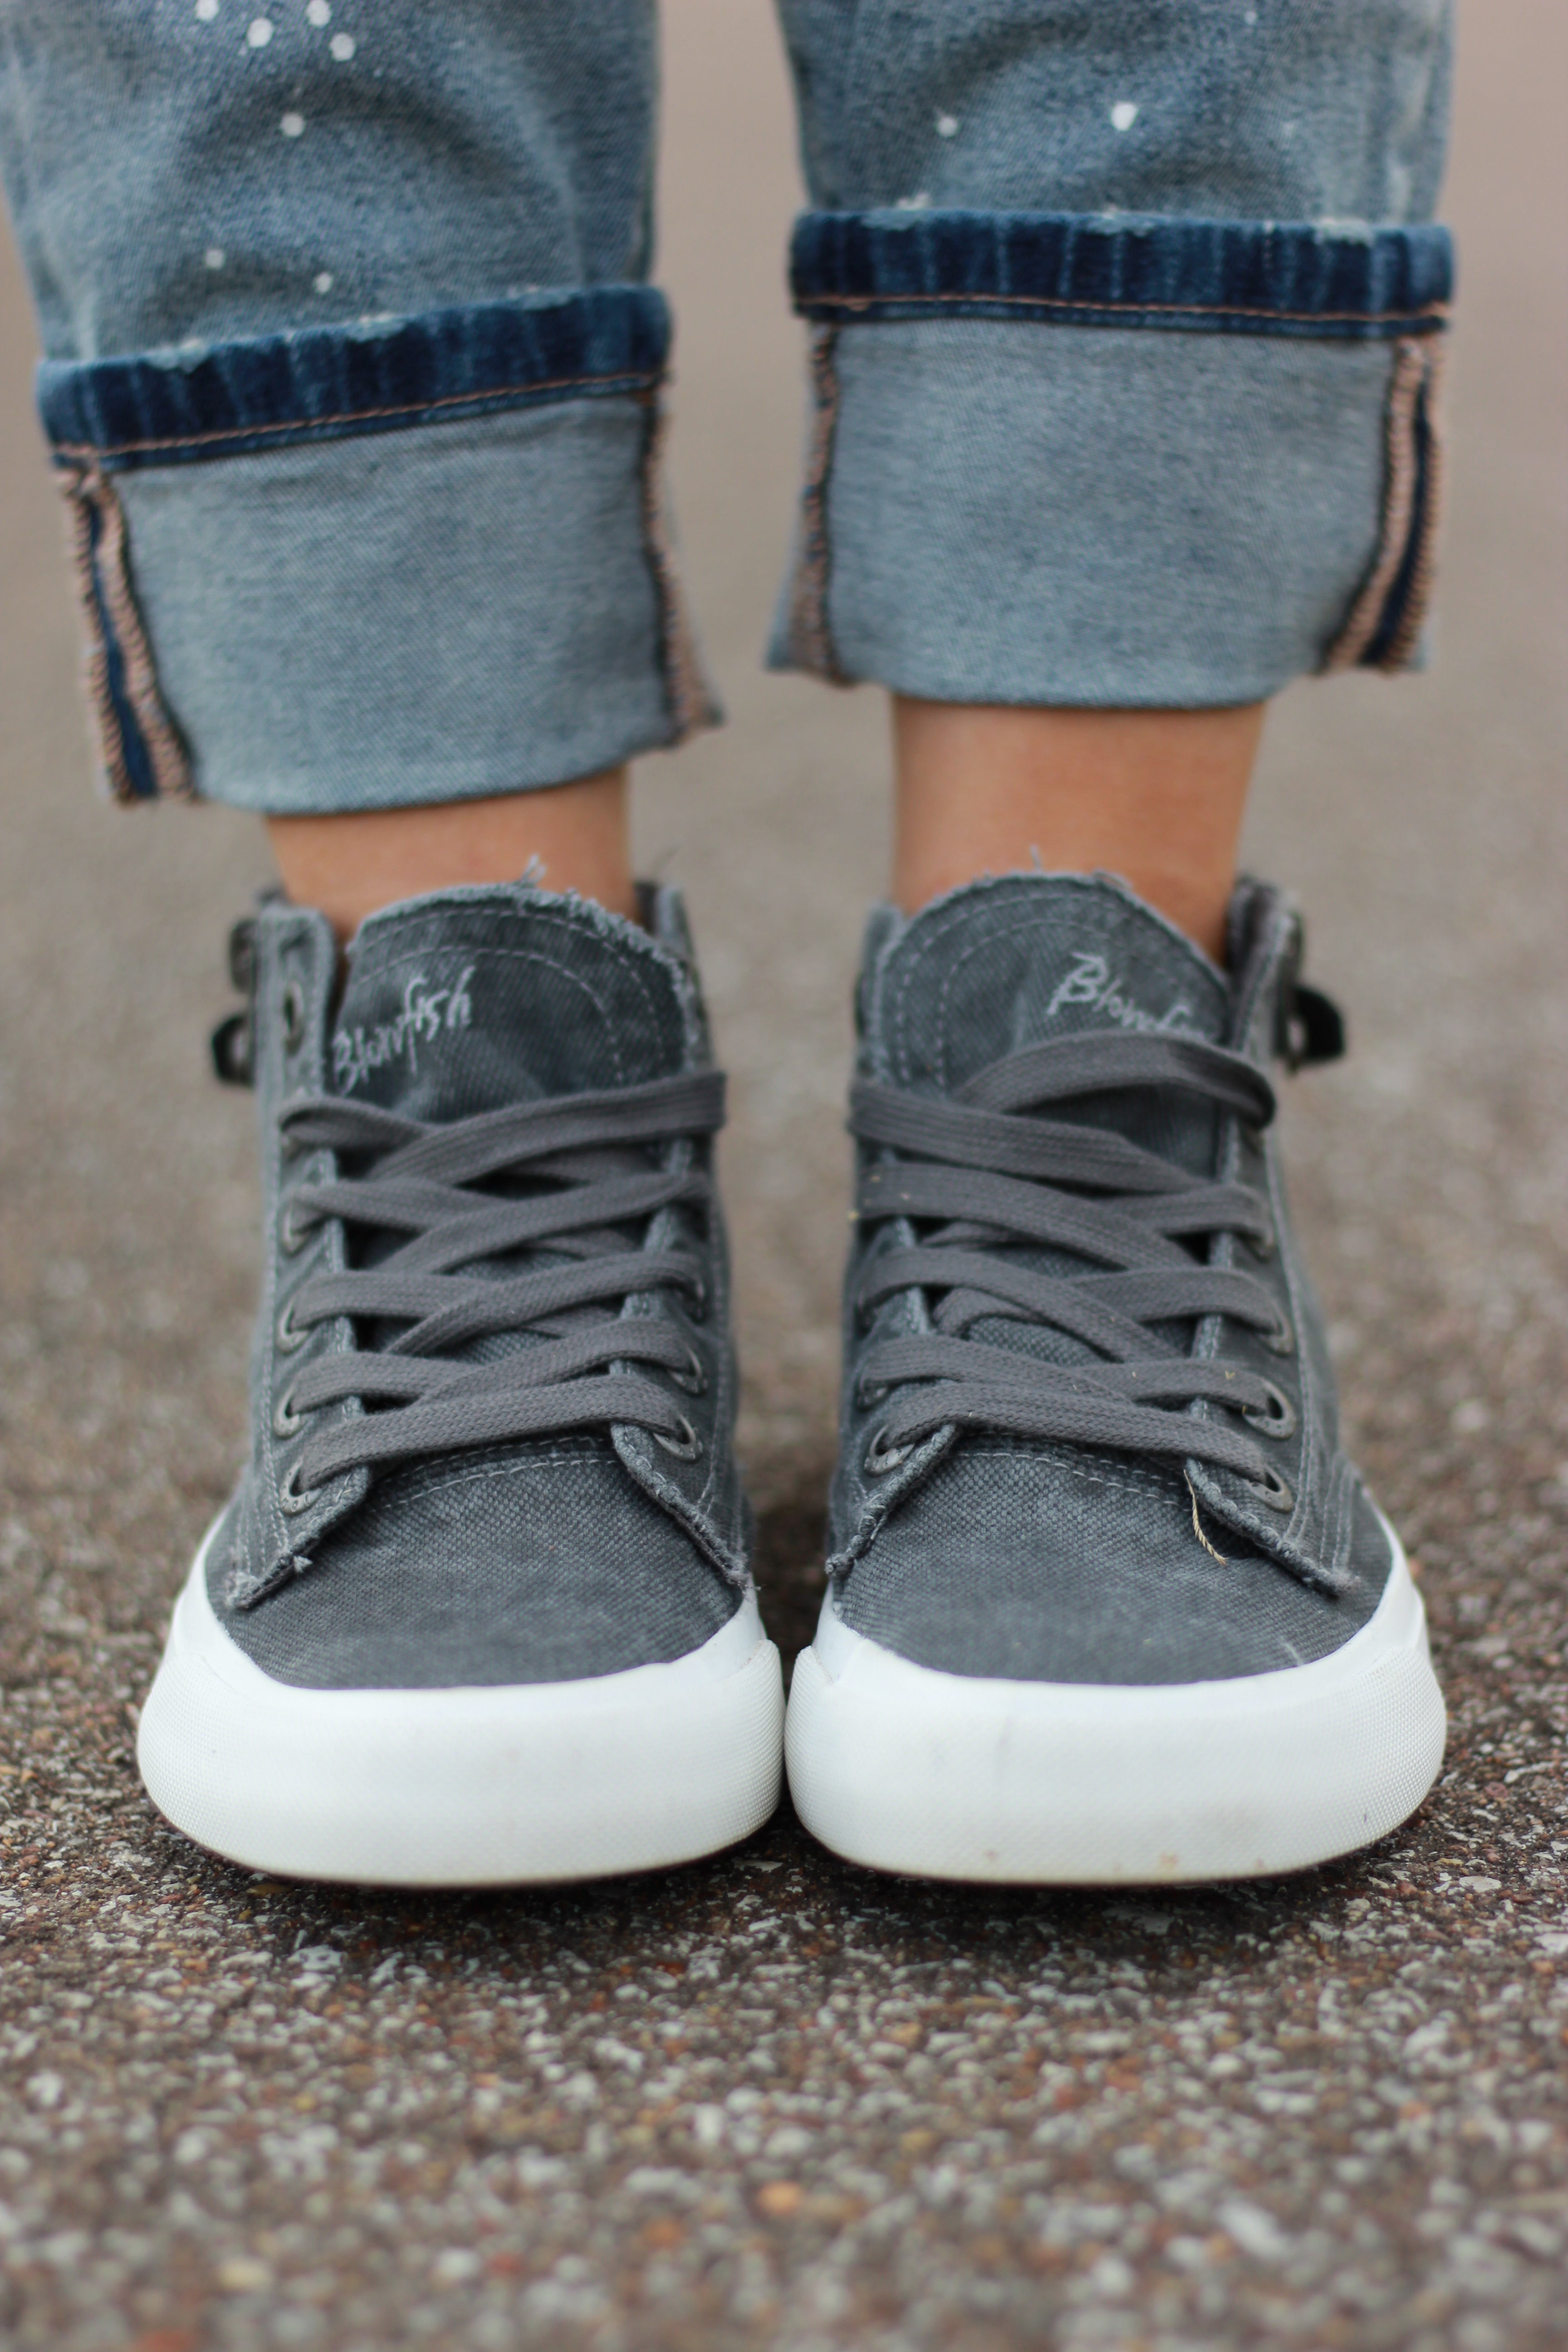 blowfish gray sneakers